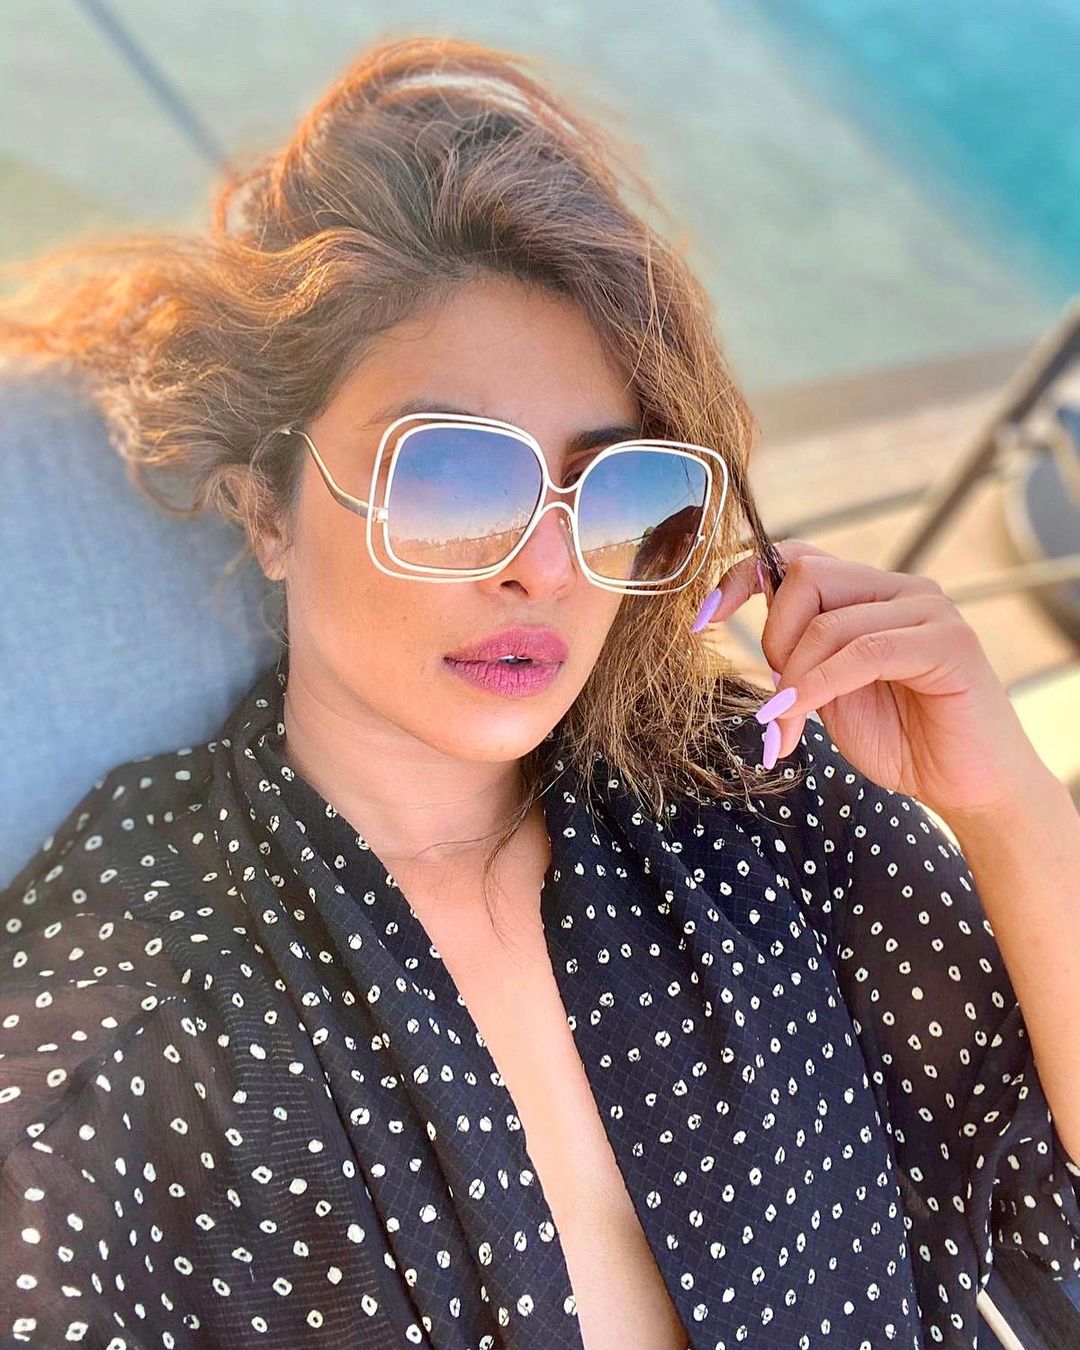  Priyanka Chopra glams it up in a plunging black dress and stylish sunglasses. (Image: Instagram)